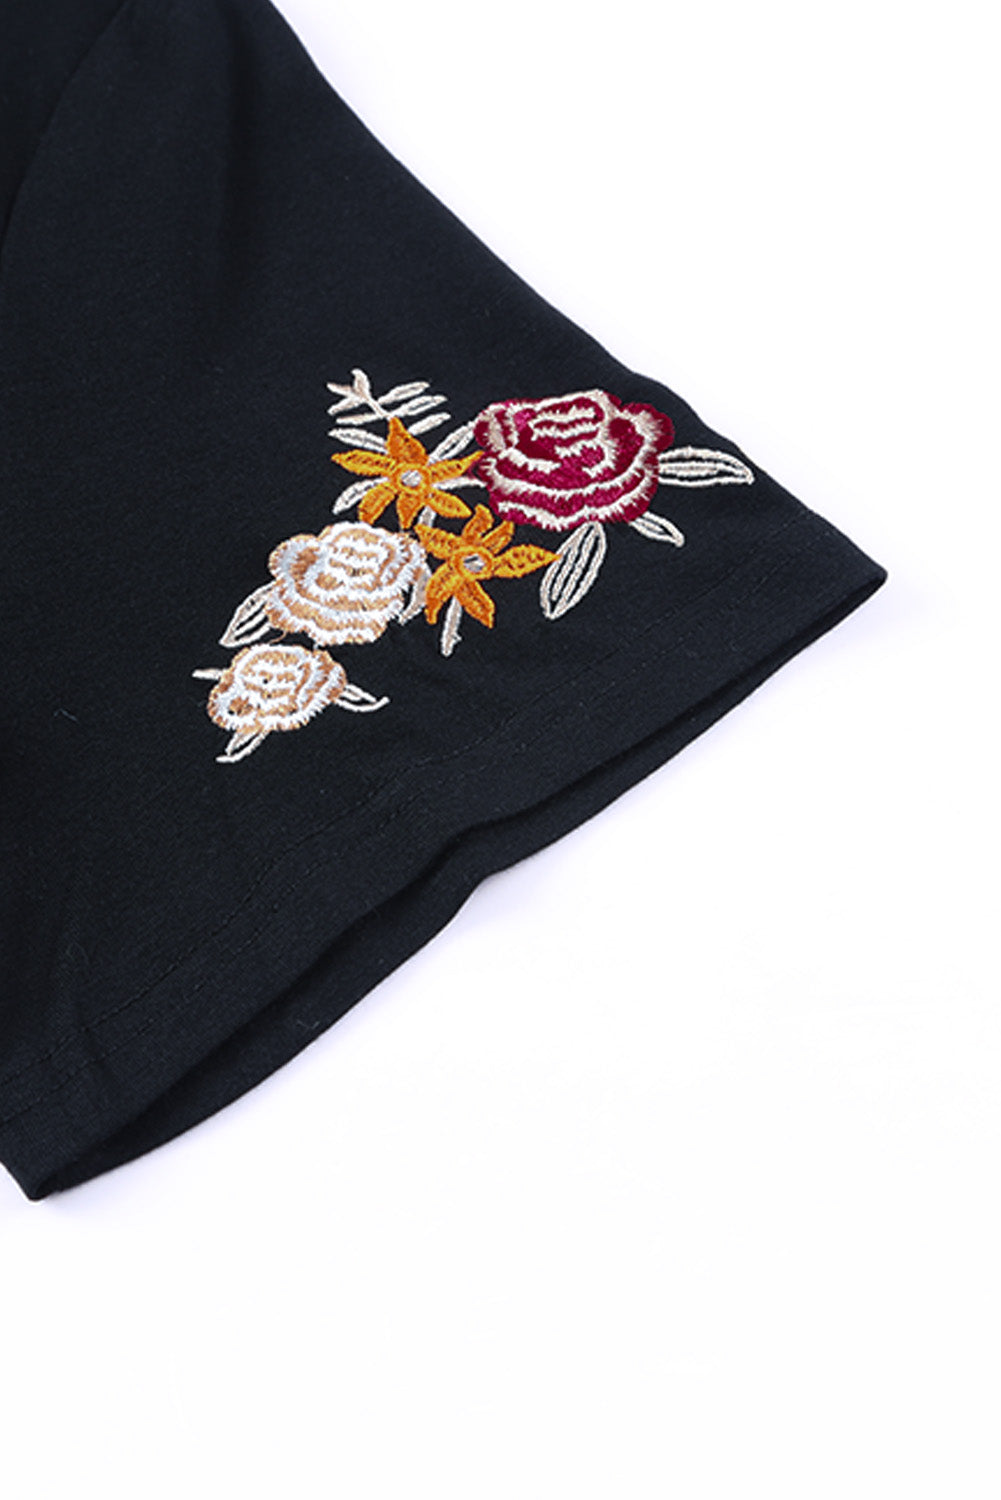 Floral Embroidered Sleeve Black Tee